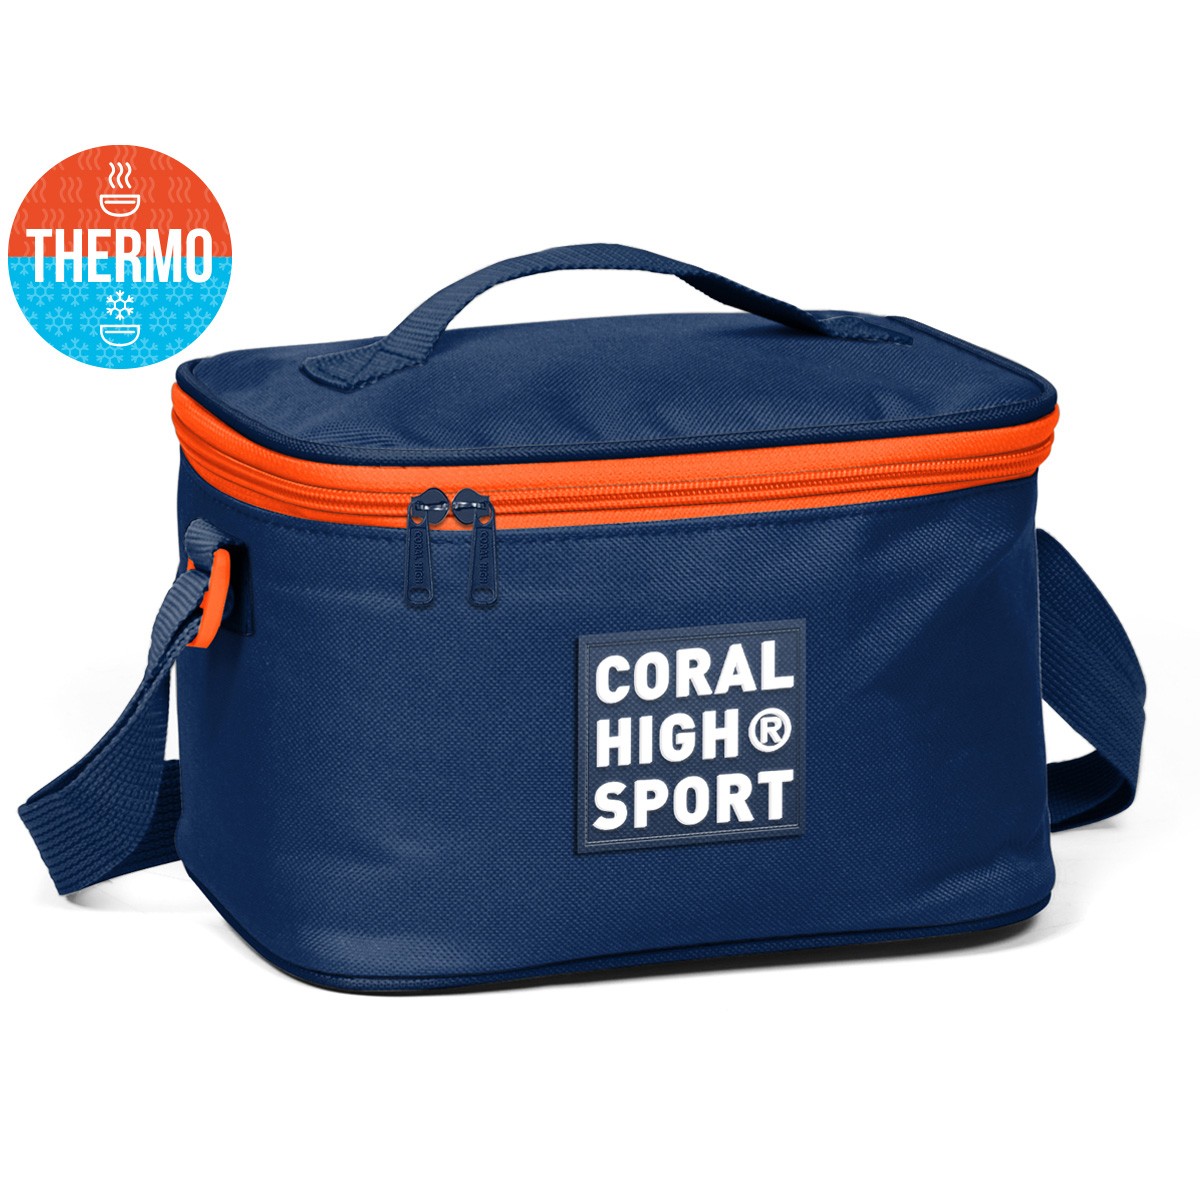 Coral High Sport Lacivert Neon Turuncu Thermo Beslenme Çantası 22806